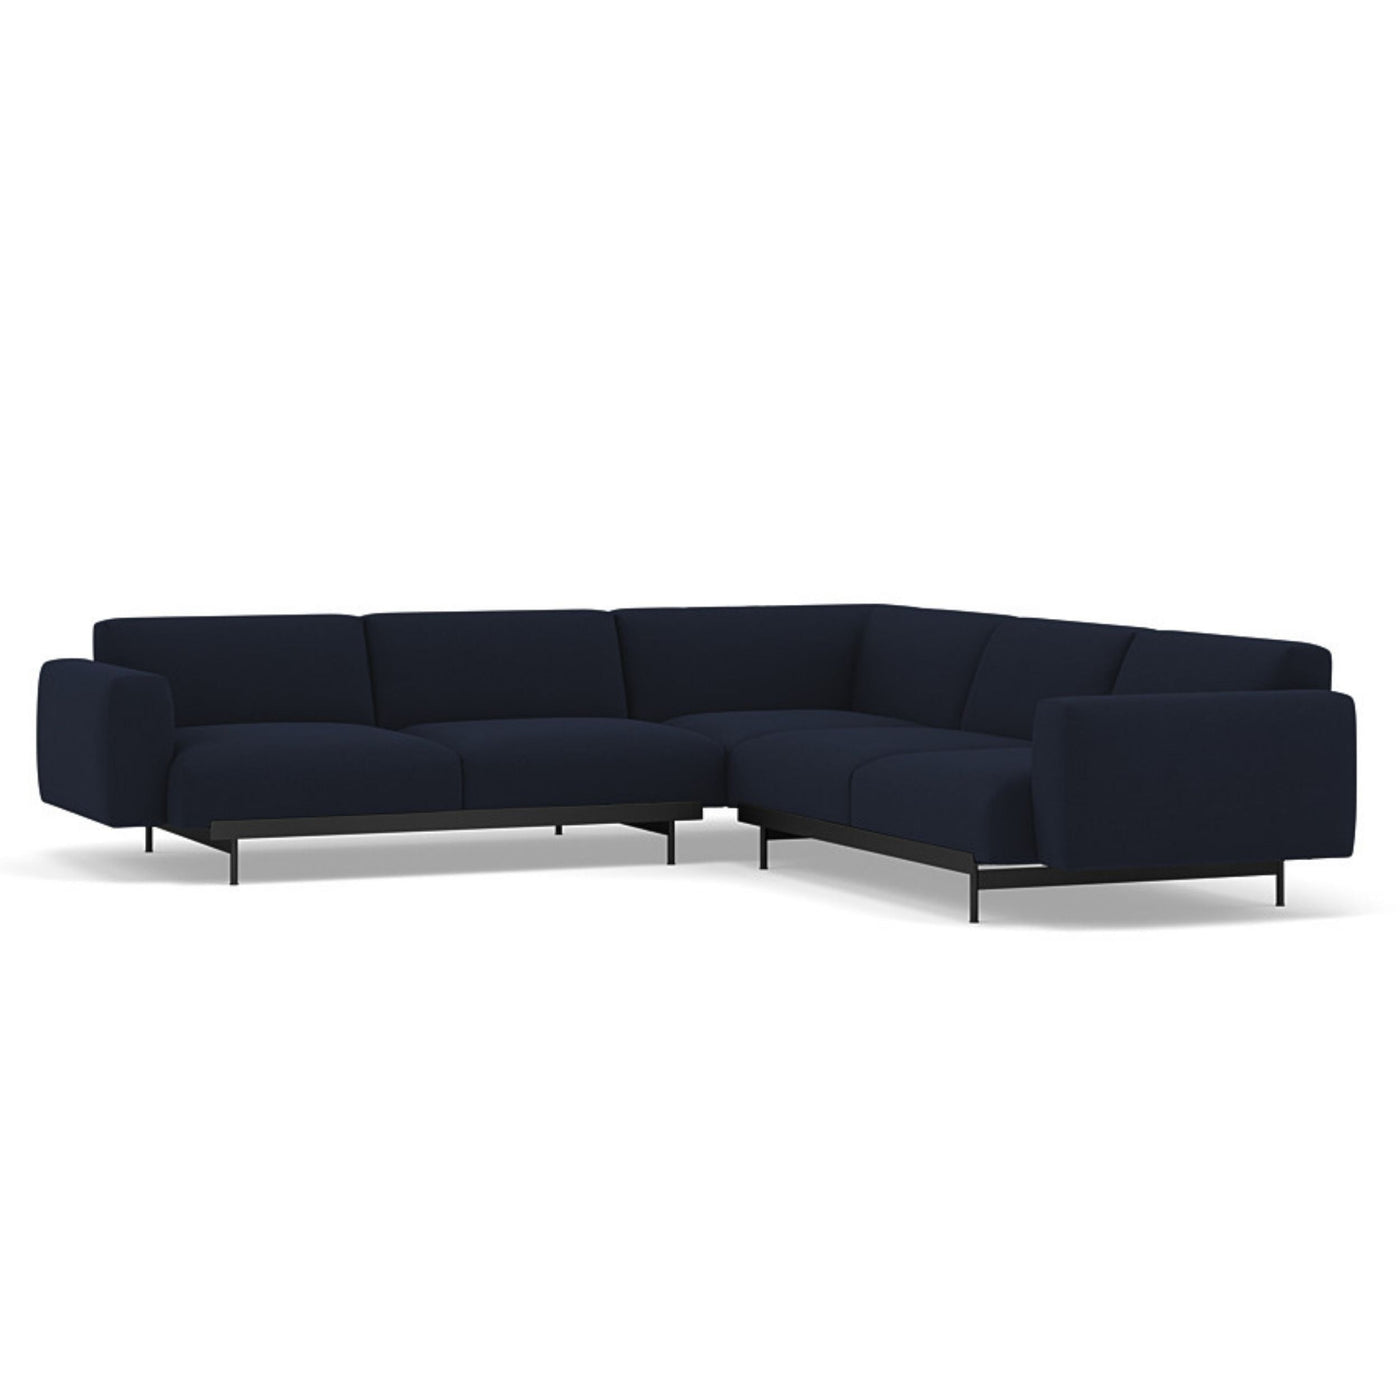 Muuto In Situ corner sofa, configuration 1 in vidar 554 fabric. Made to order from someday designs. #colour_vidar-554